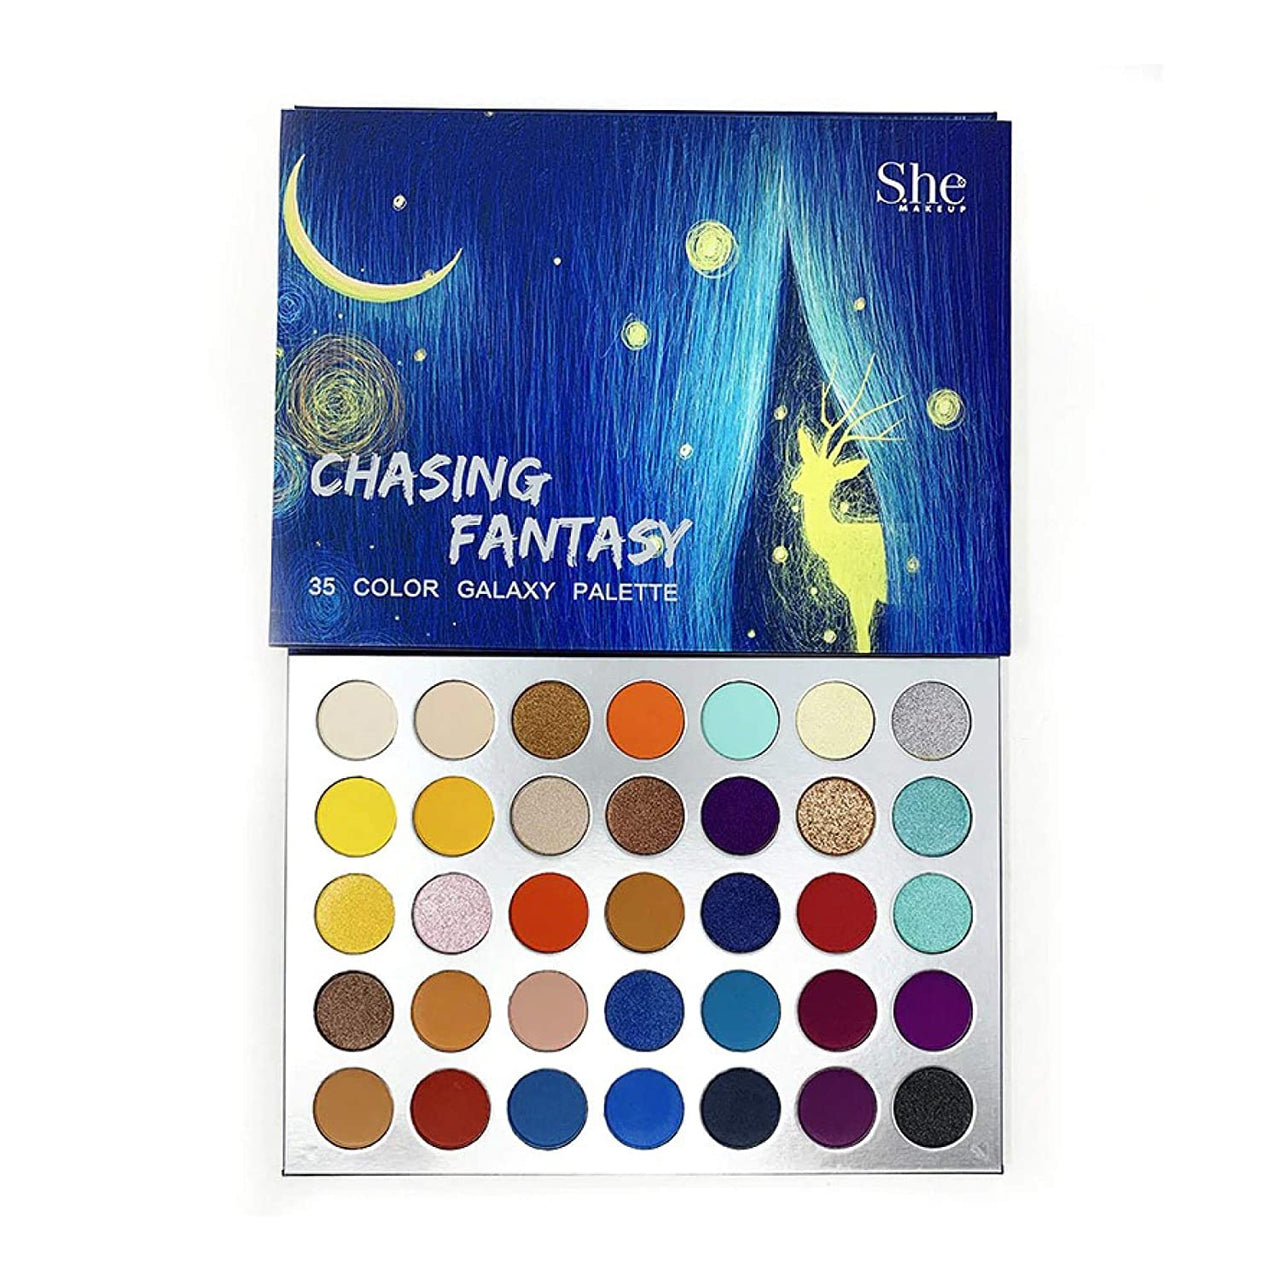 She Makeup SP02 : Chasing Fantasy  35 Color Galaxy Palette Wholesale